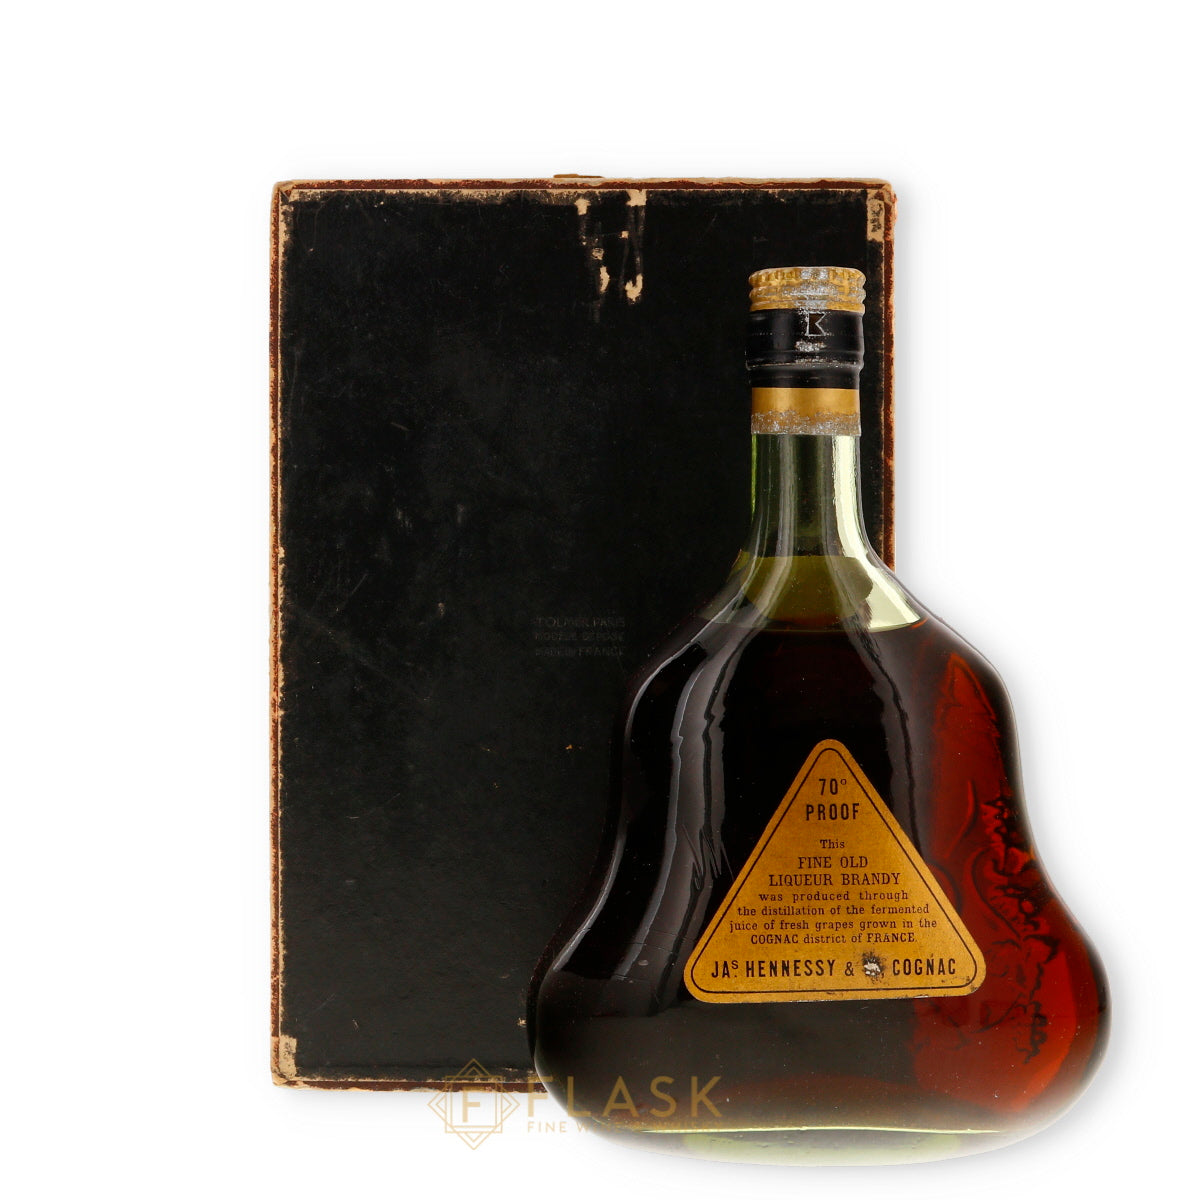 Hennessy X.O Cognac + Giftbox